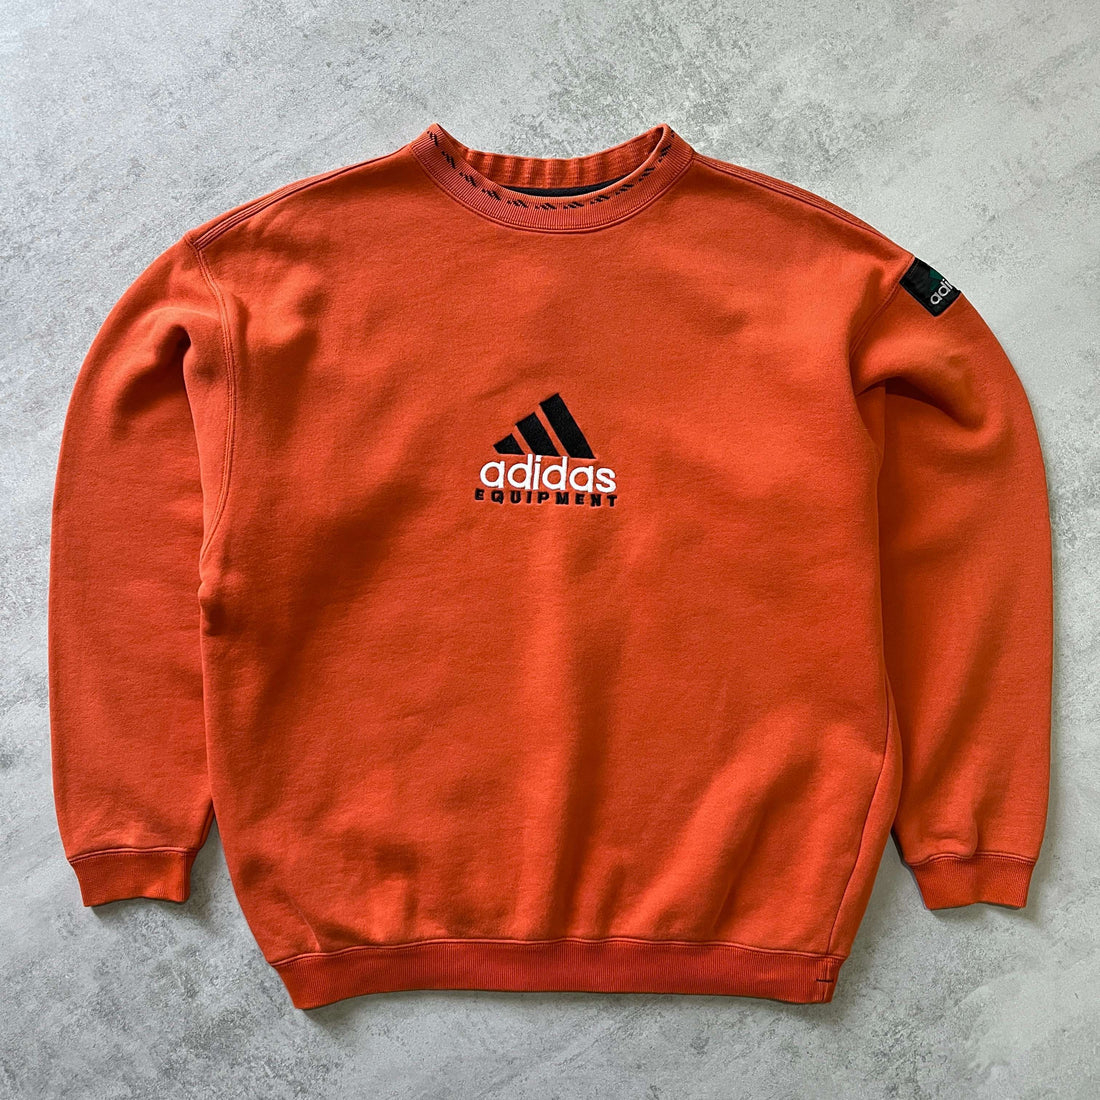 Adidas Equipment 1990s heavyweight embroidered sweatshirt (M)